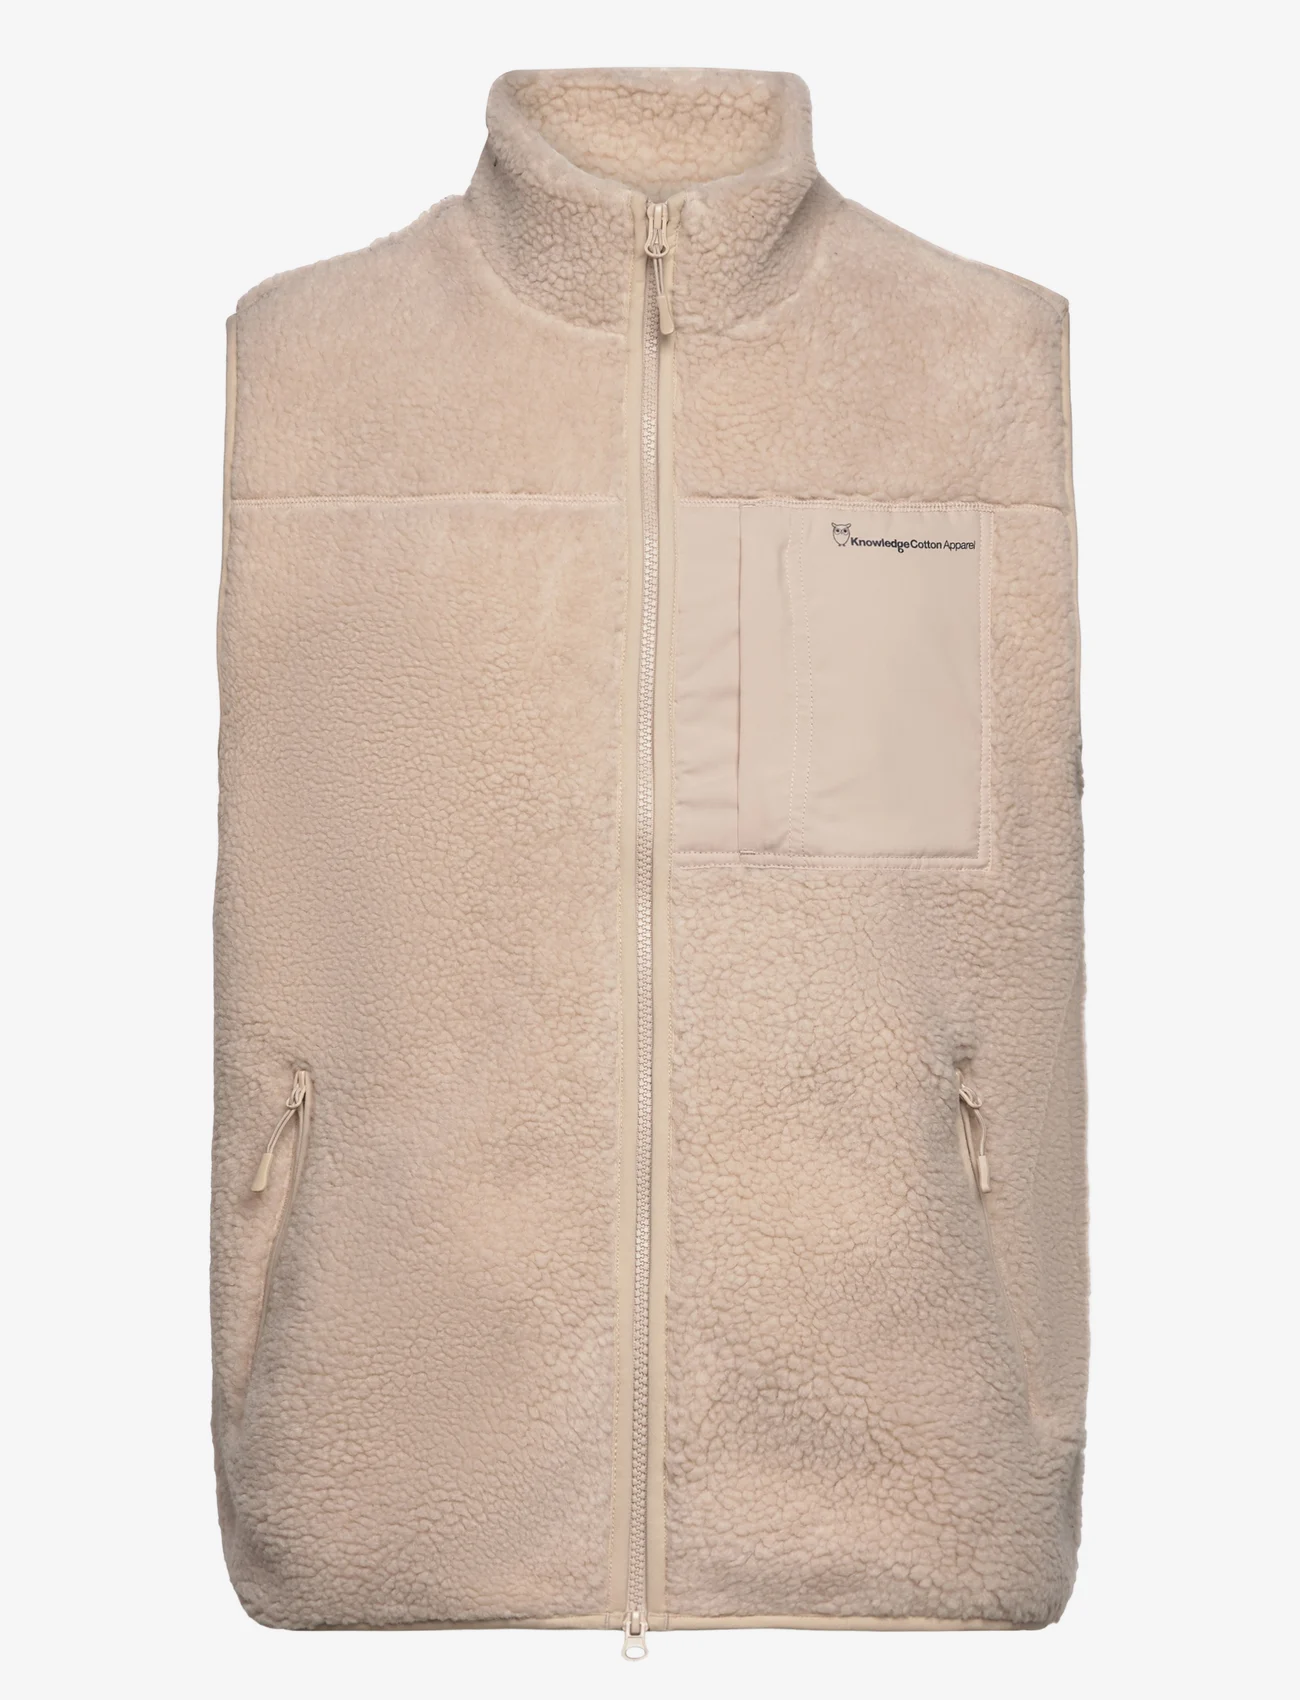 Knowledge Cotton Apparel - Teddy fleece vest - GRS/Vegan - sweatshirts - item colour - 0